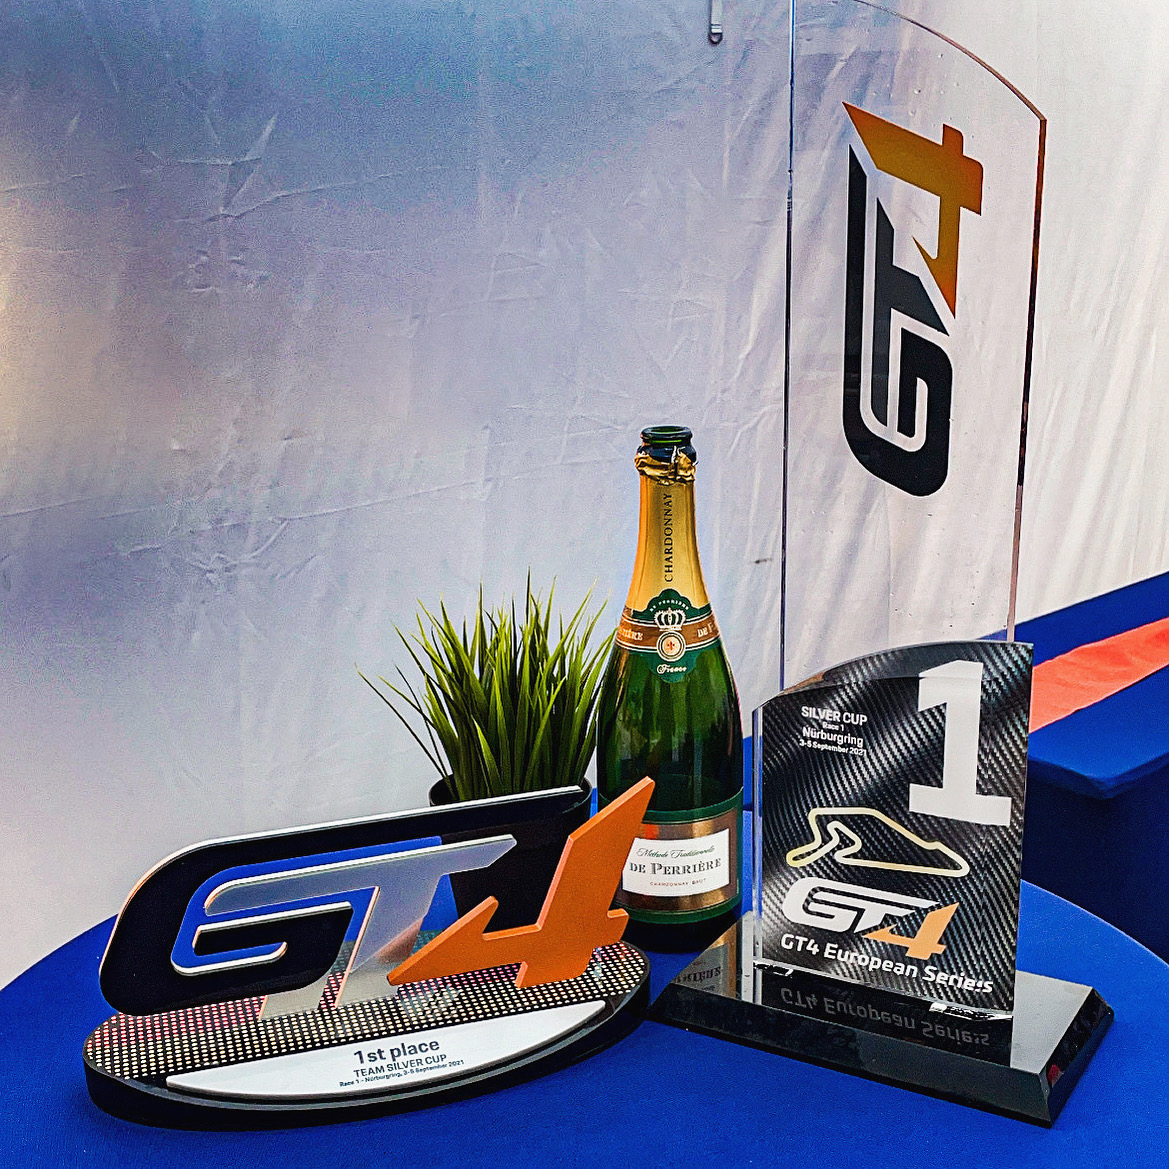 Winning GT4 European Series